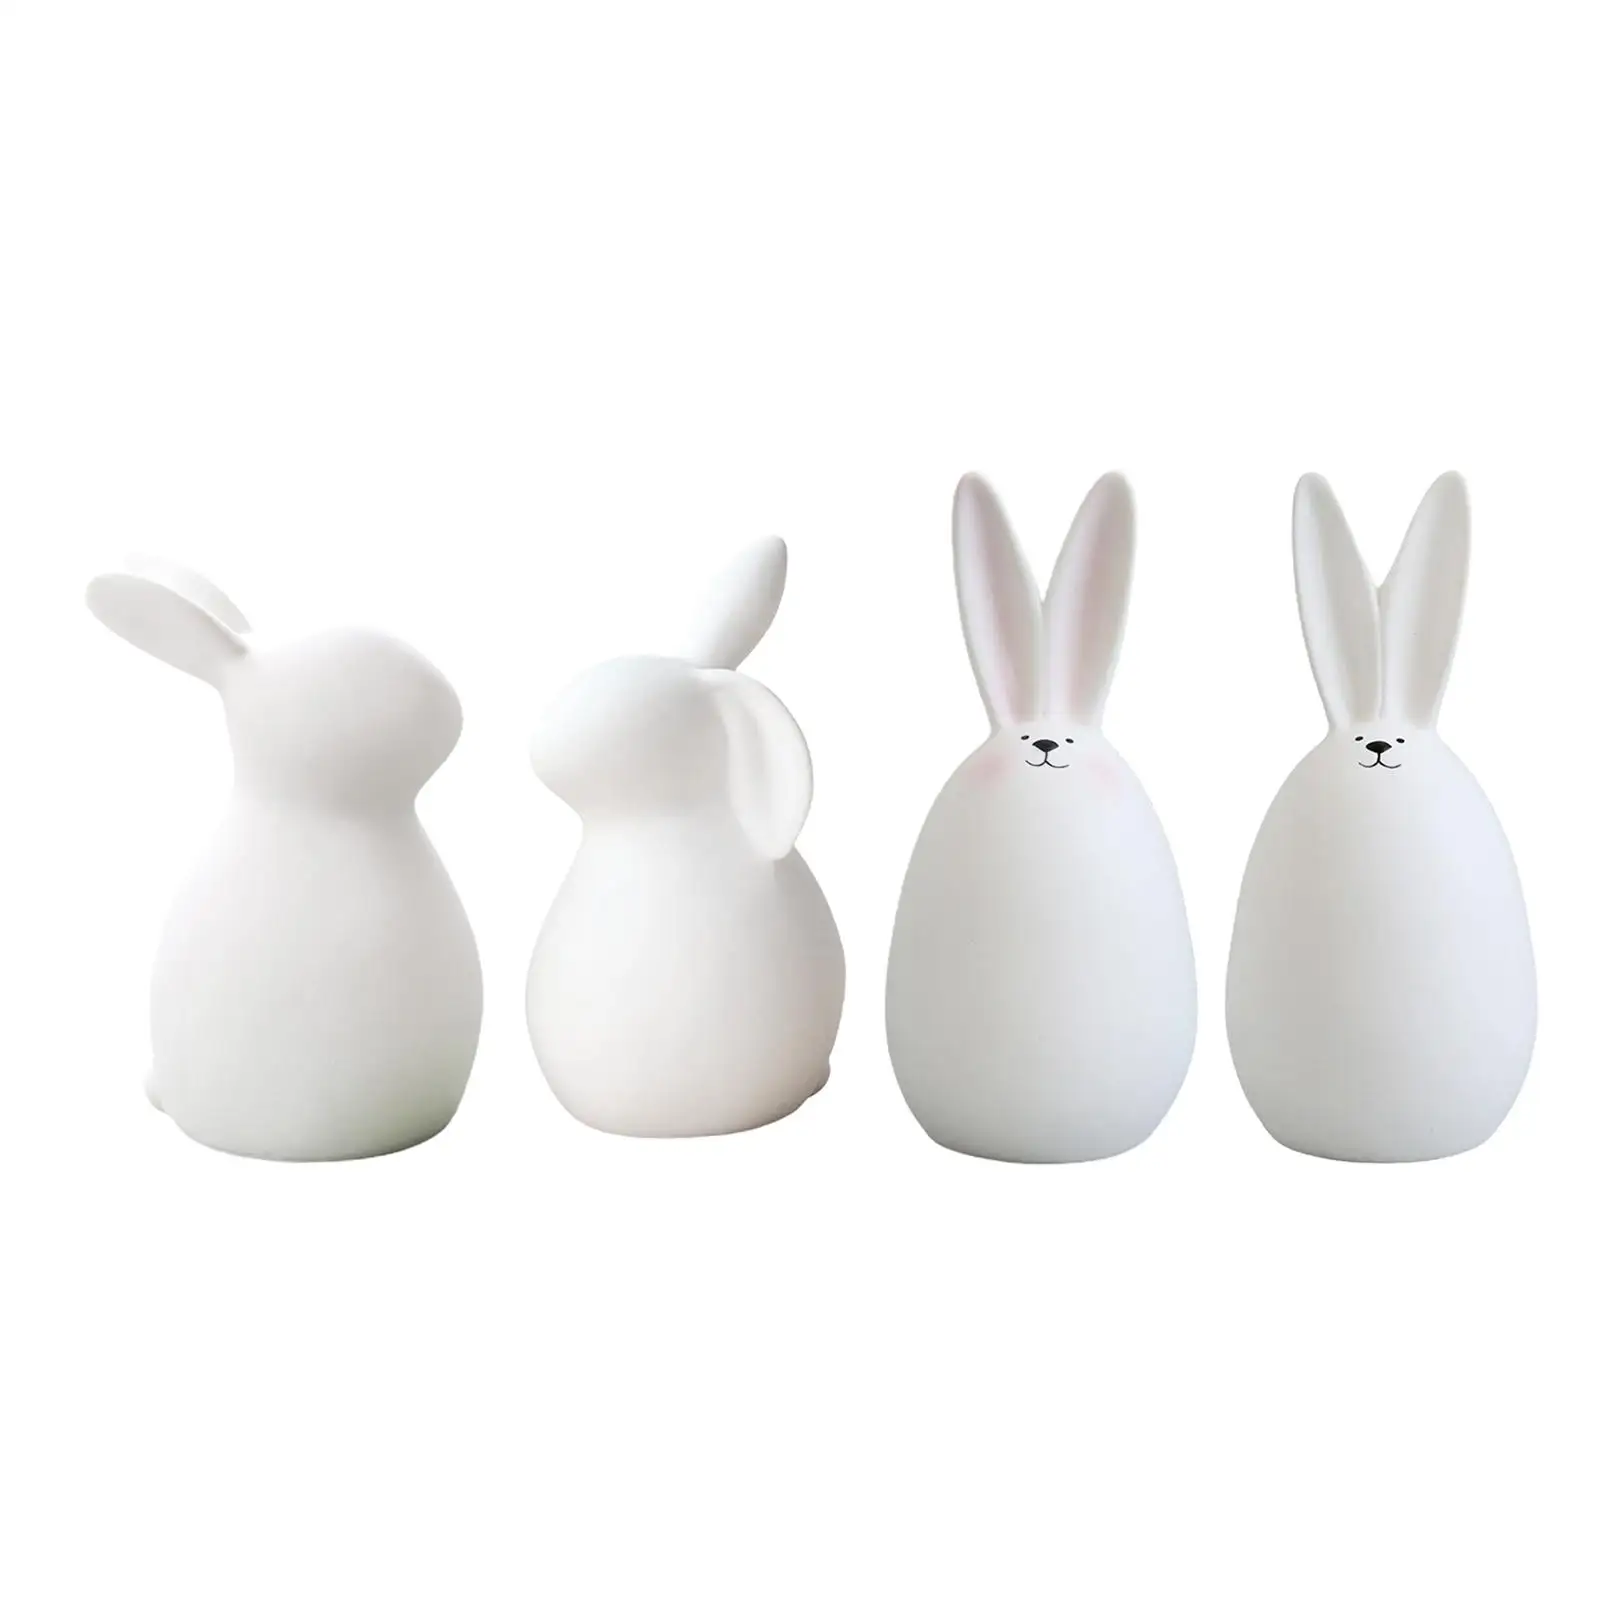 Adorable Rabbit Statue Easter Bunny Figurines for Arrangement Office Cabinet